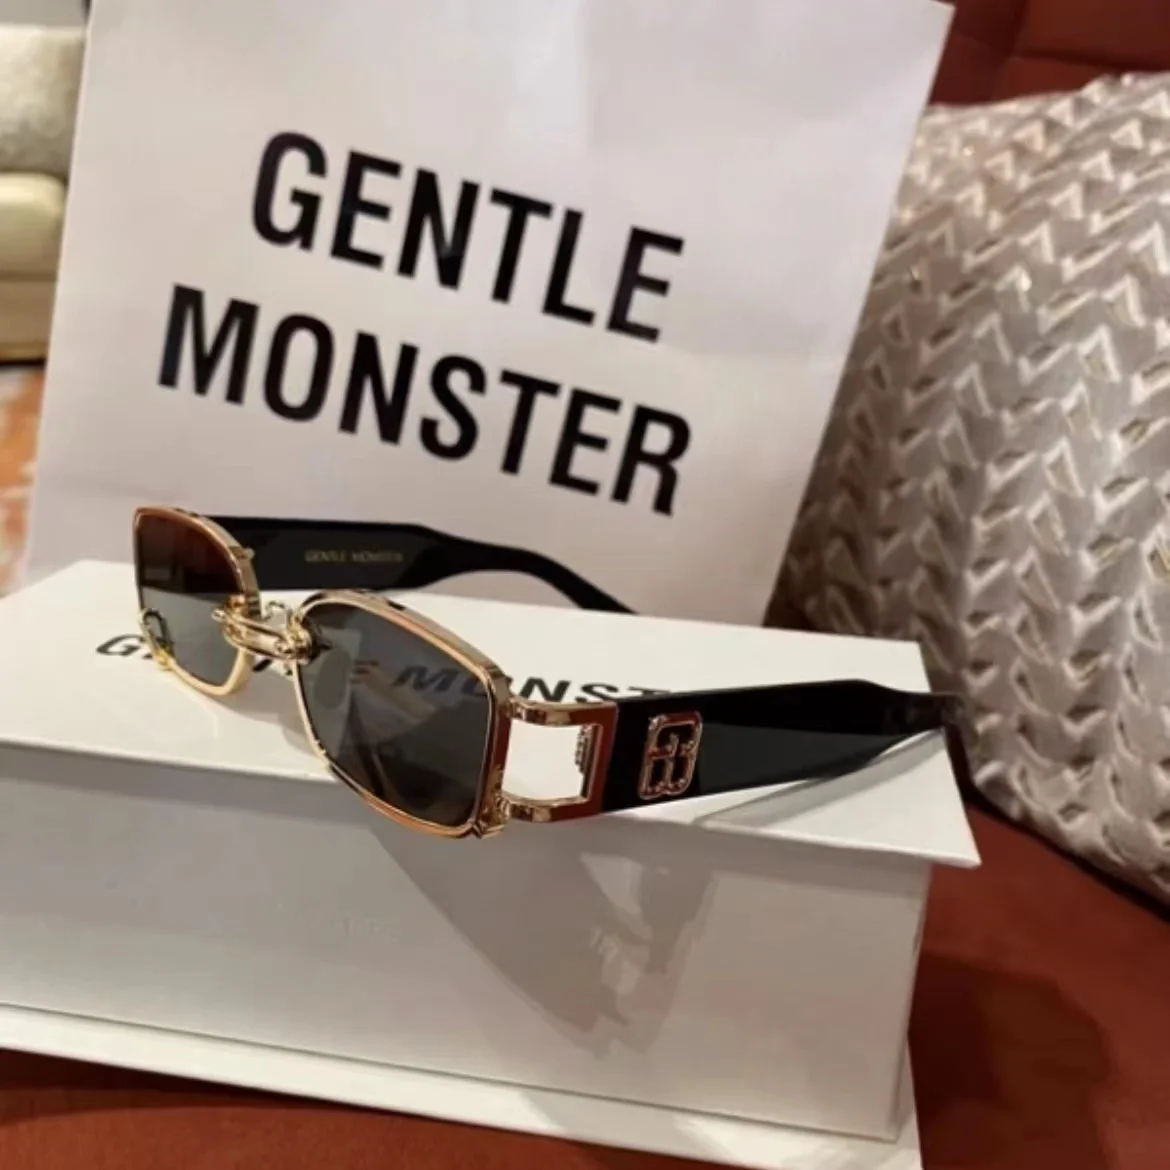 

GENTLE MONSTER Sunglasses Women 2021 For Men GW002 Luxury Designer Vintage Trending Products Acetate UV400 Brown GM Sun Glasses